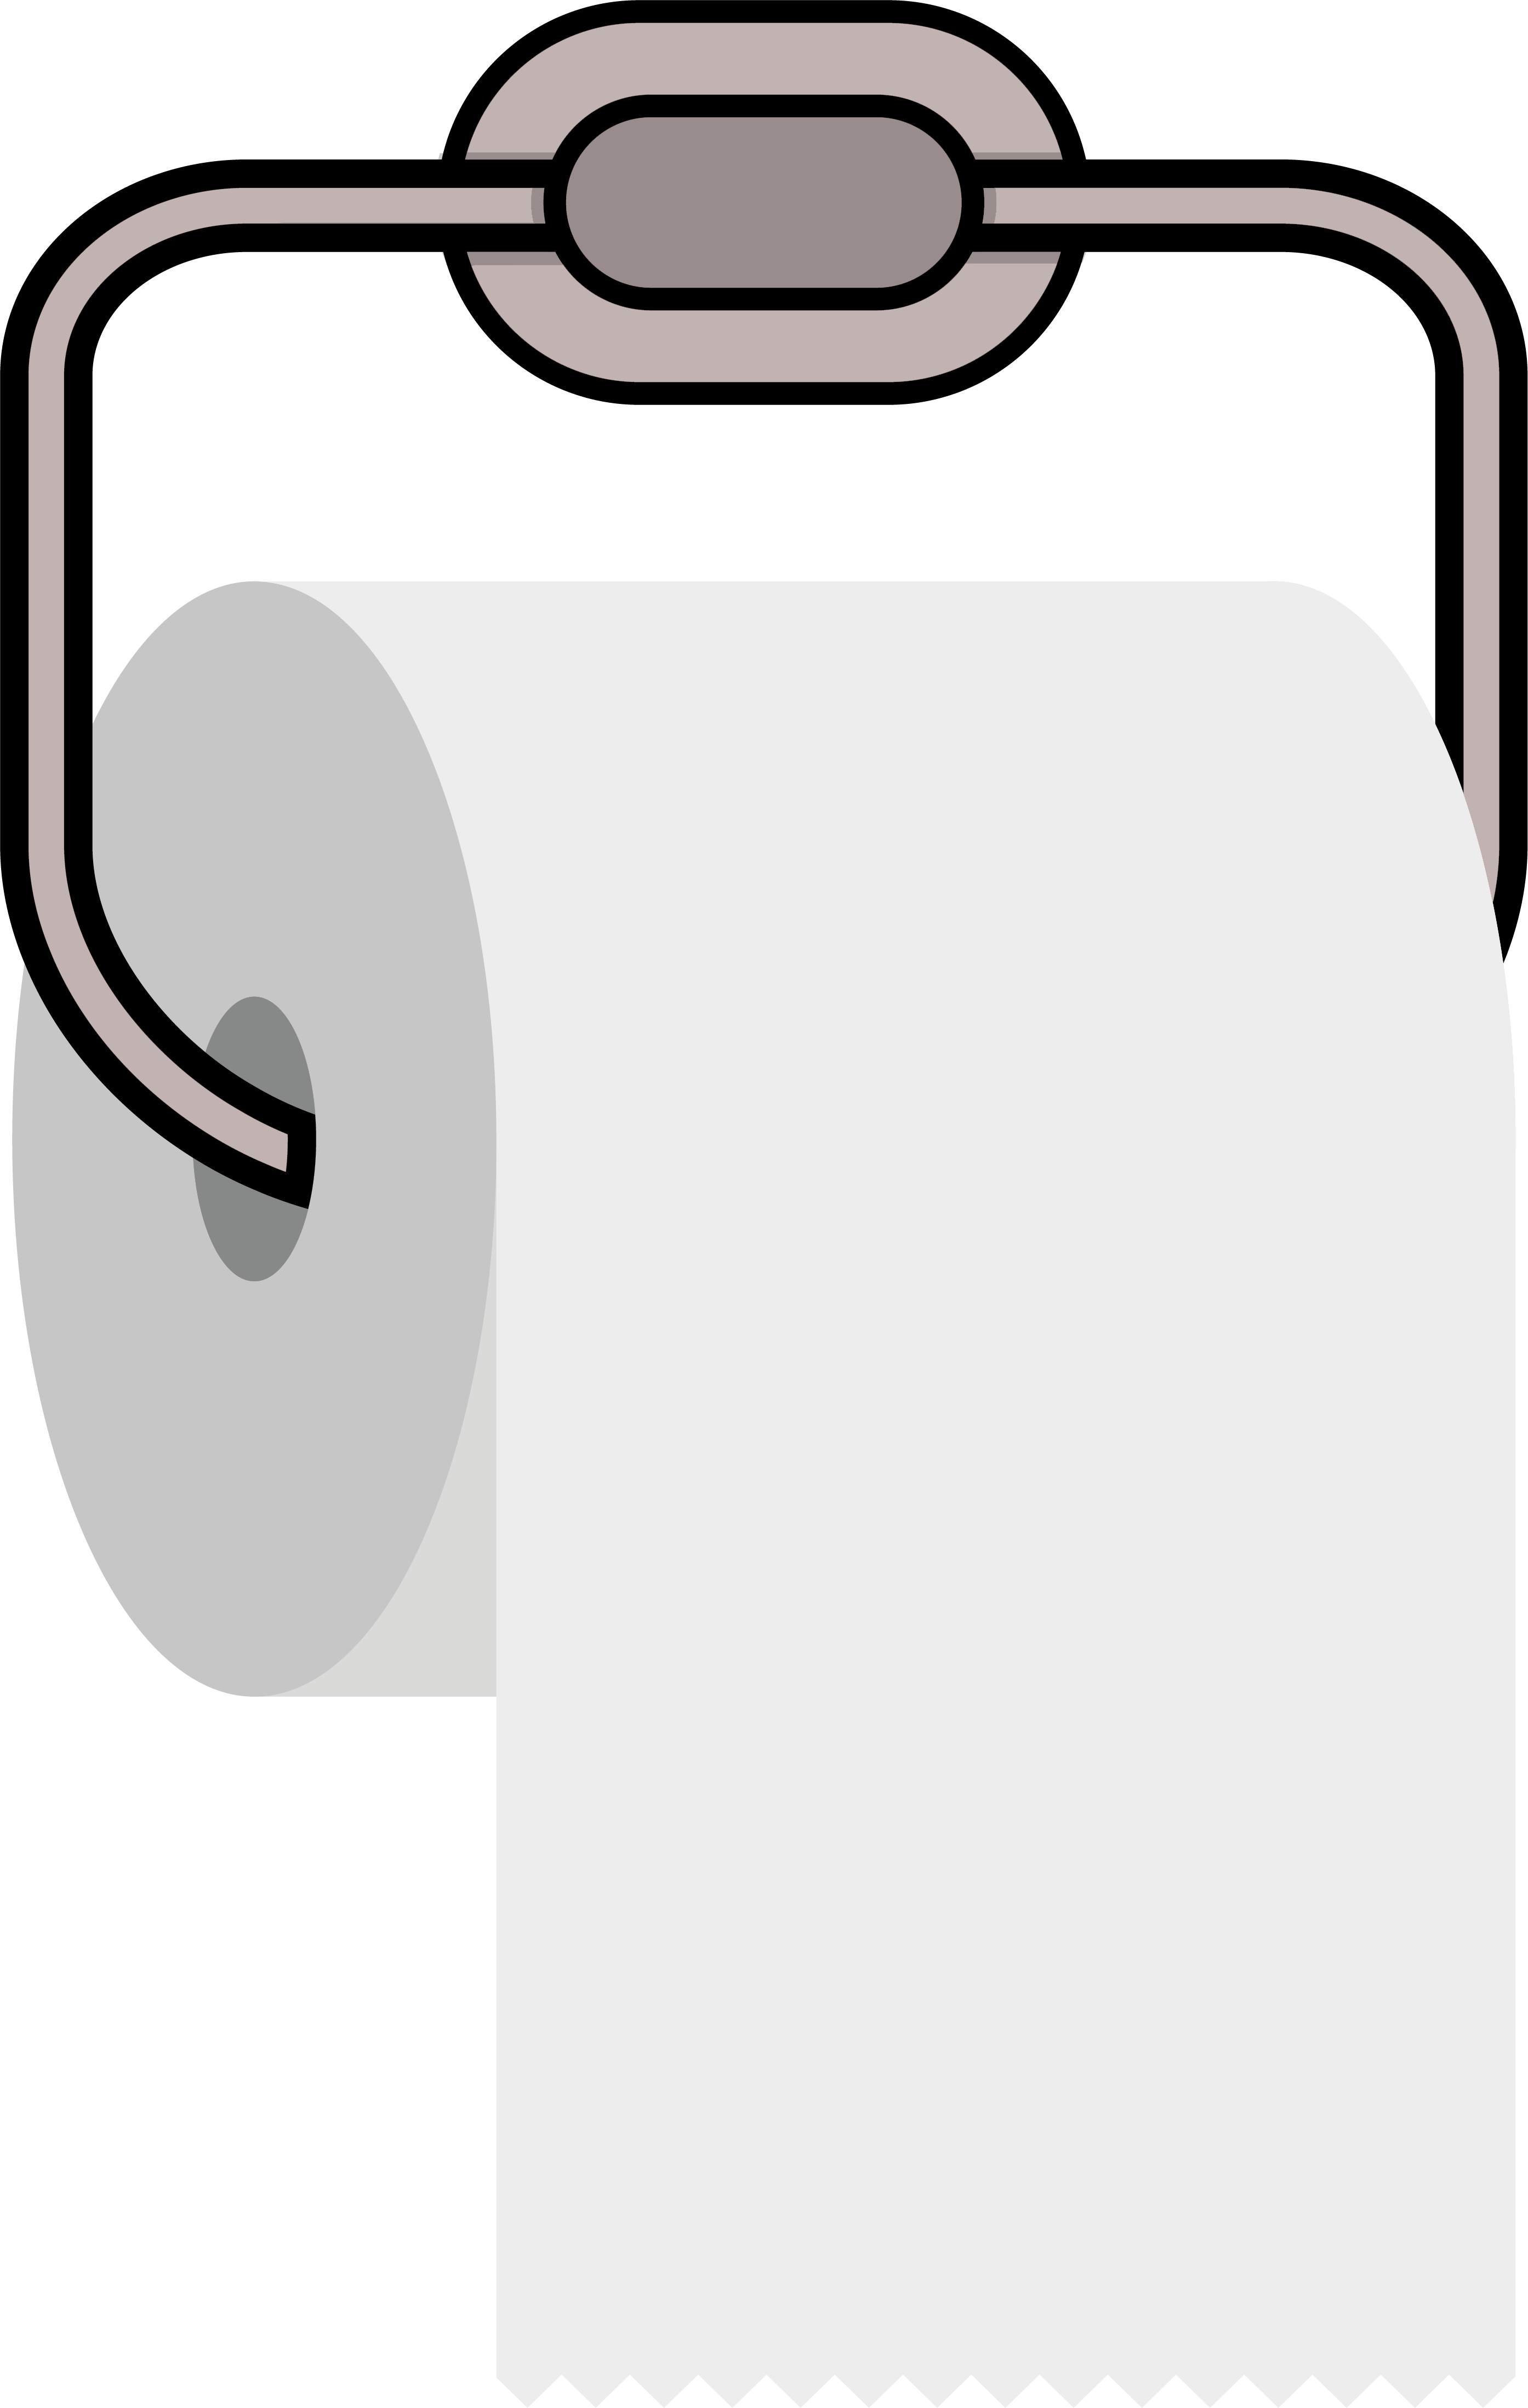 Toilet roll